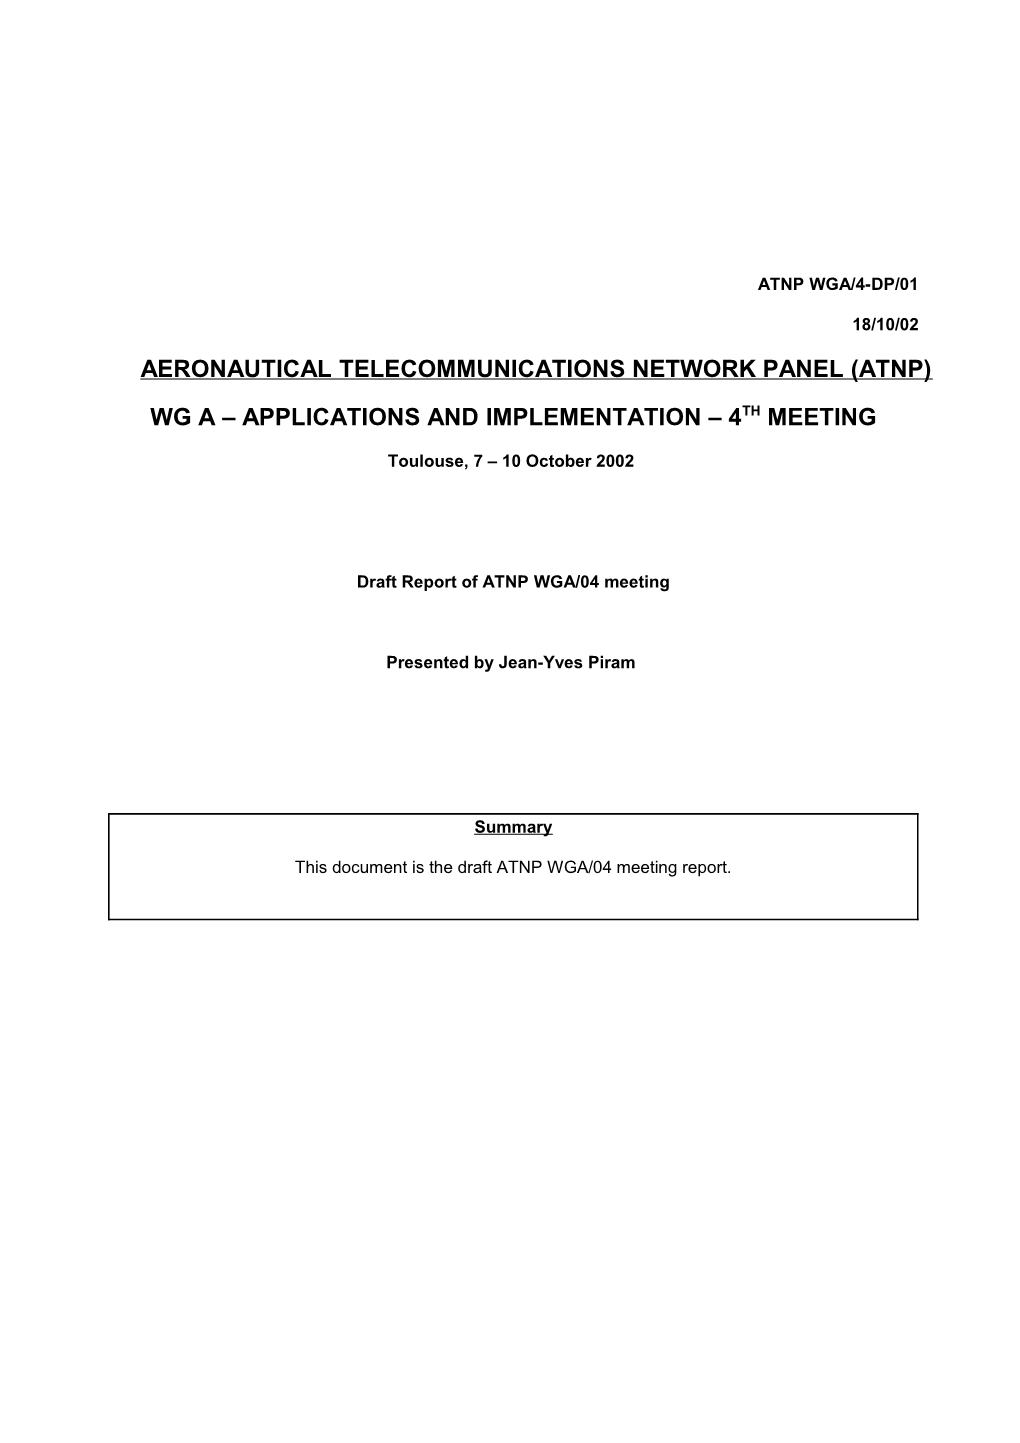 Draft Report of ATNP WGA/04 Meeting